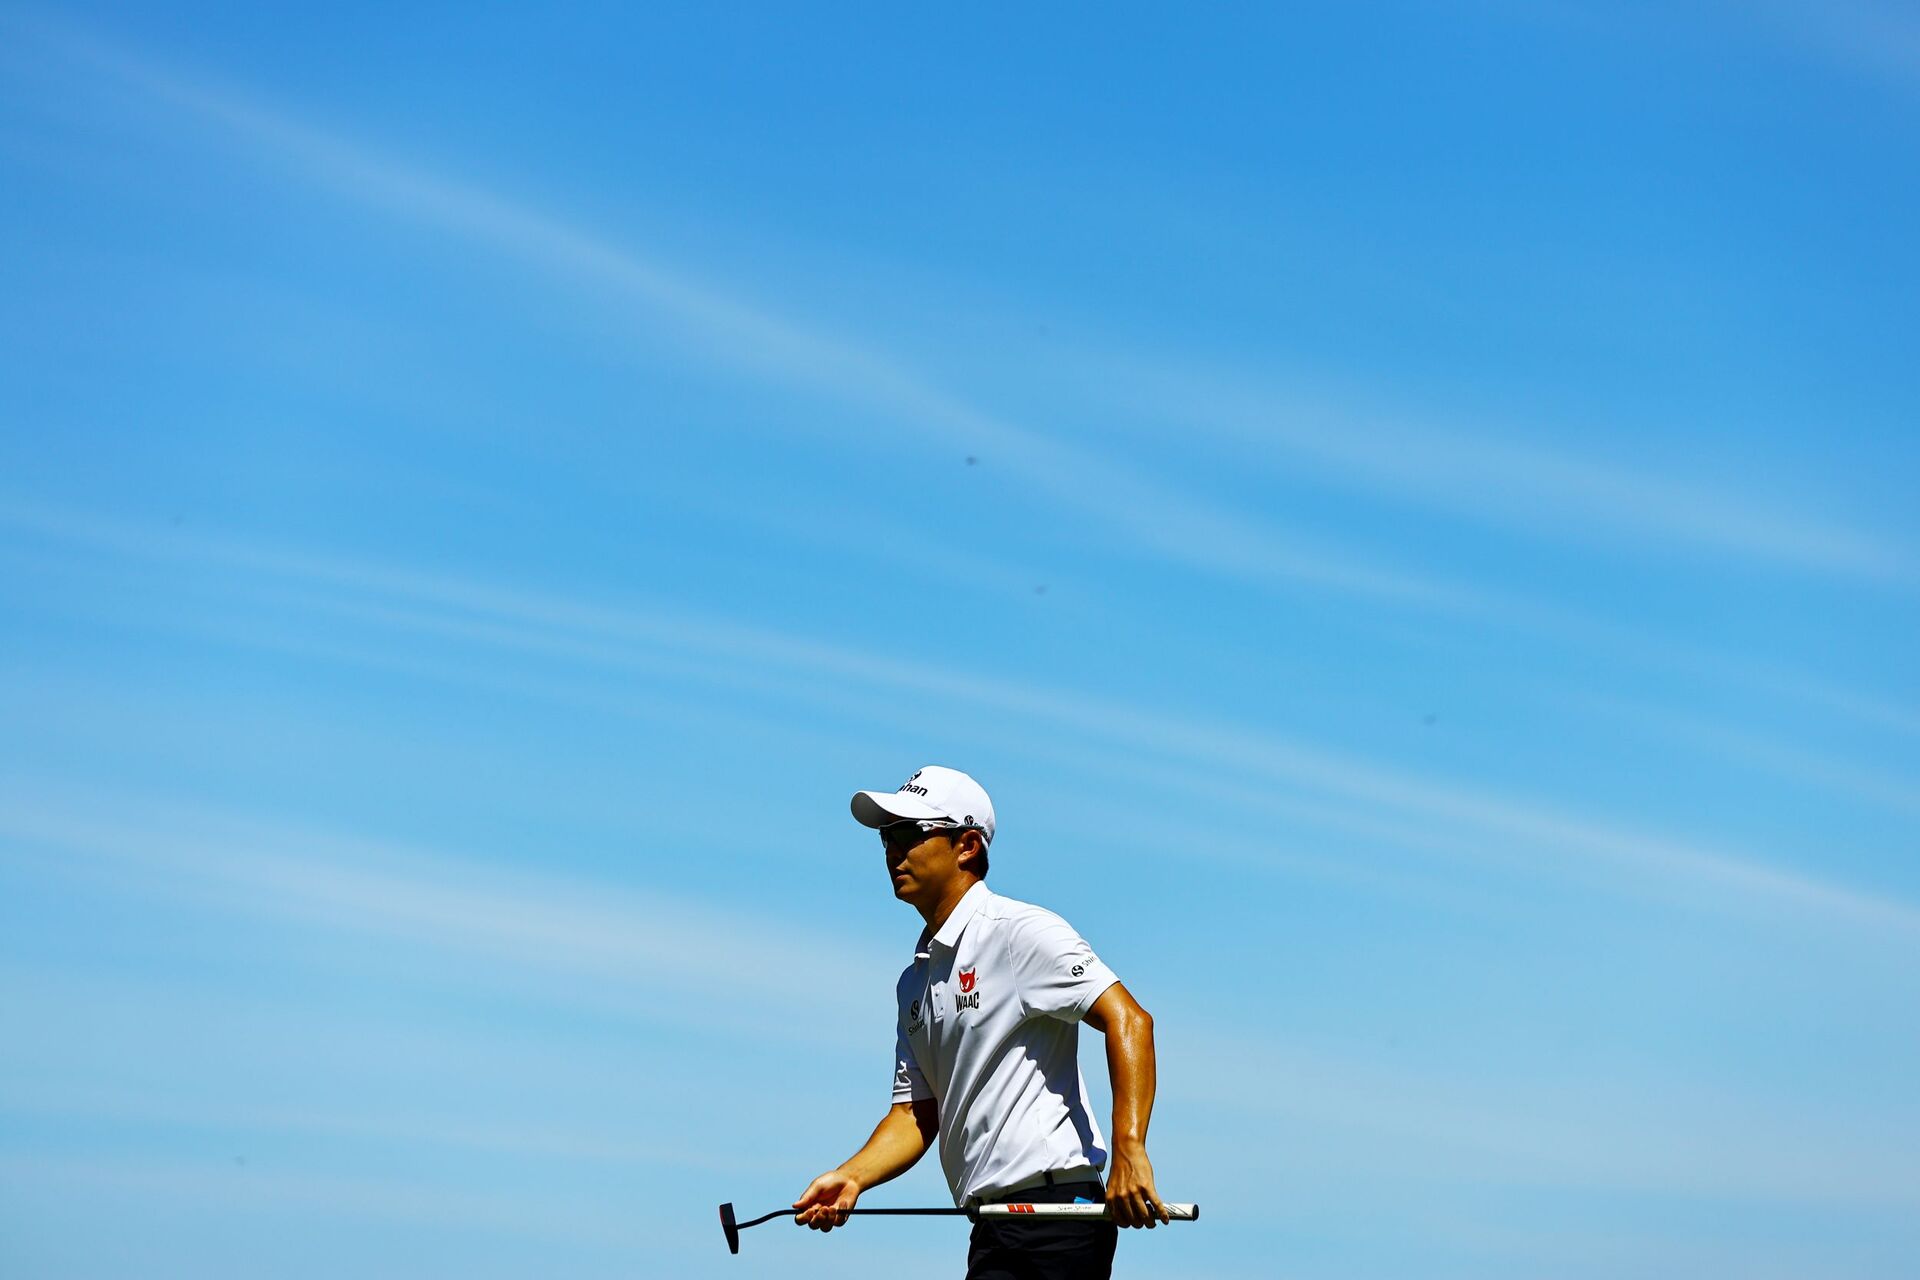 Song takes flight at Panasonic Open Golf Championship